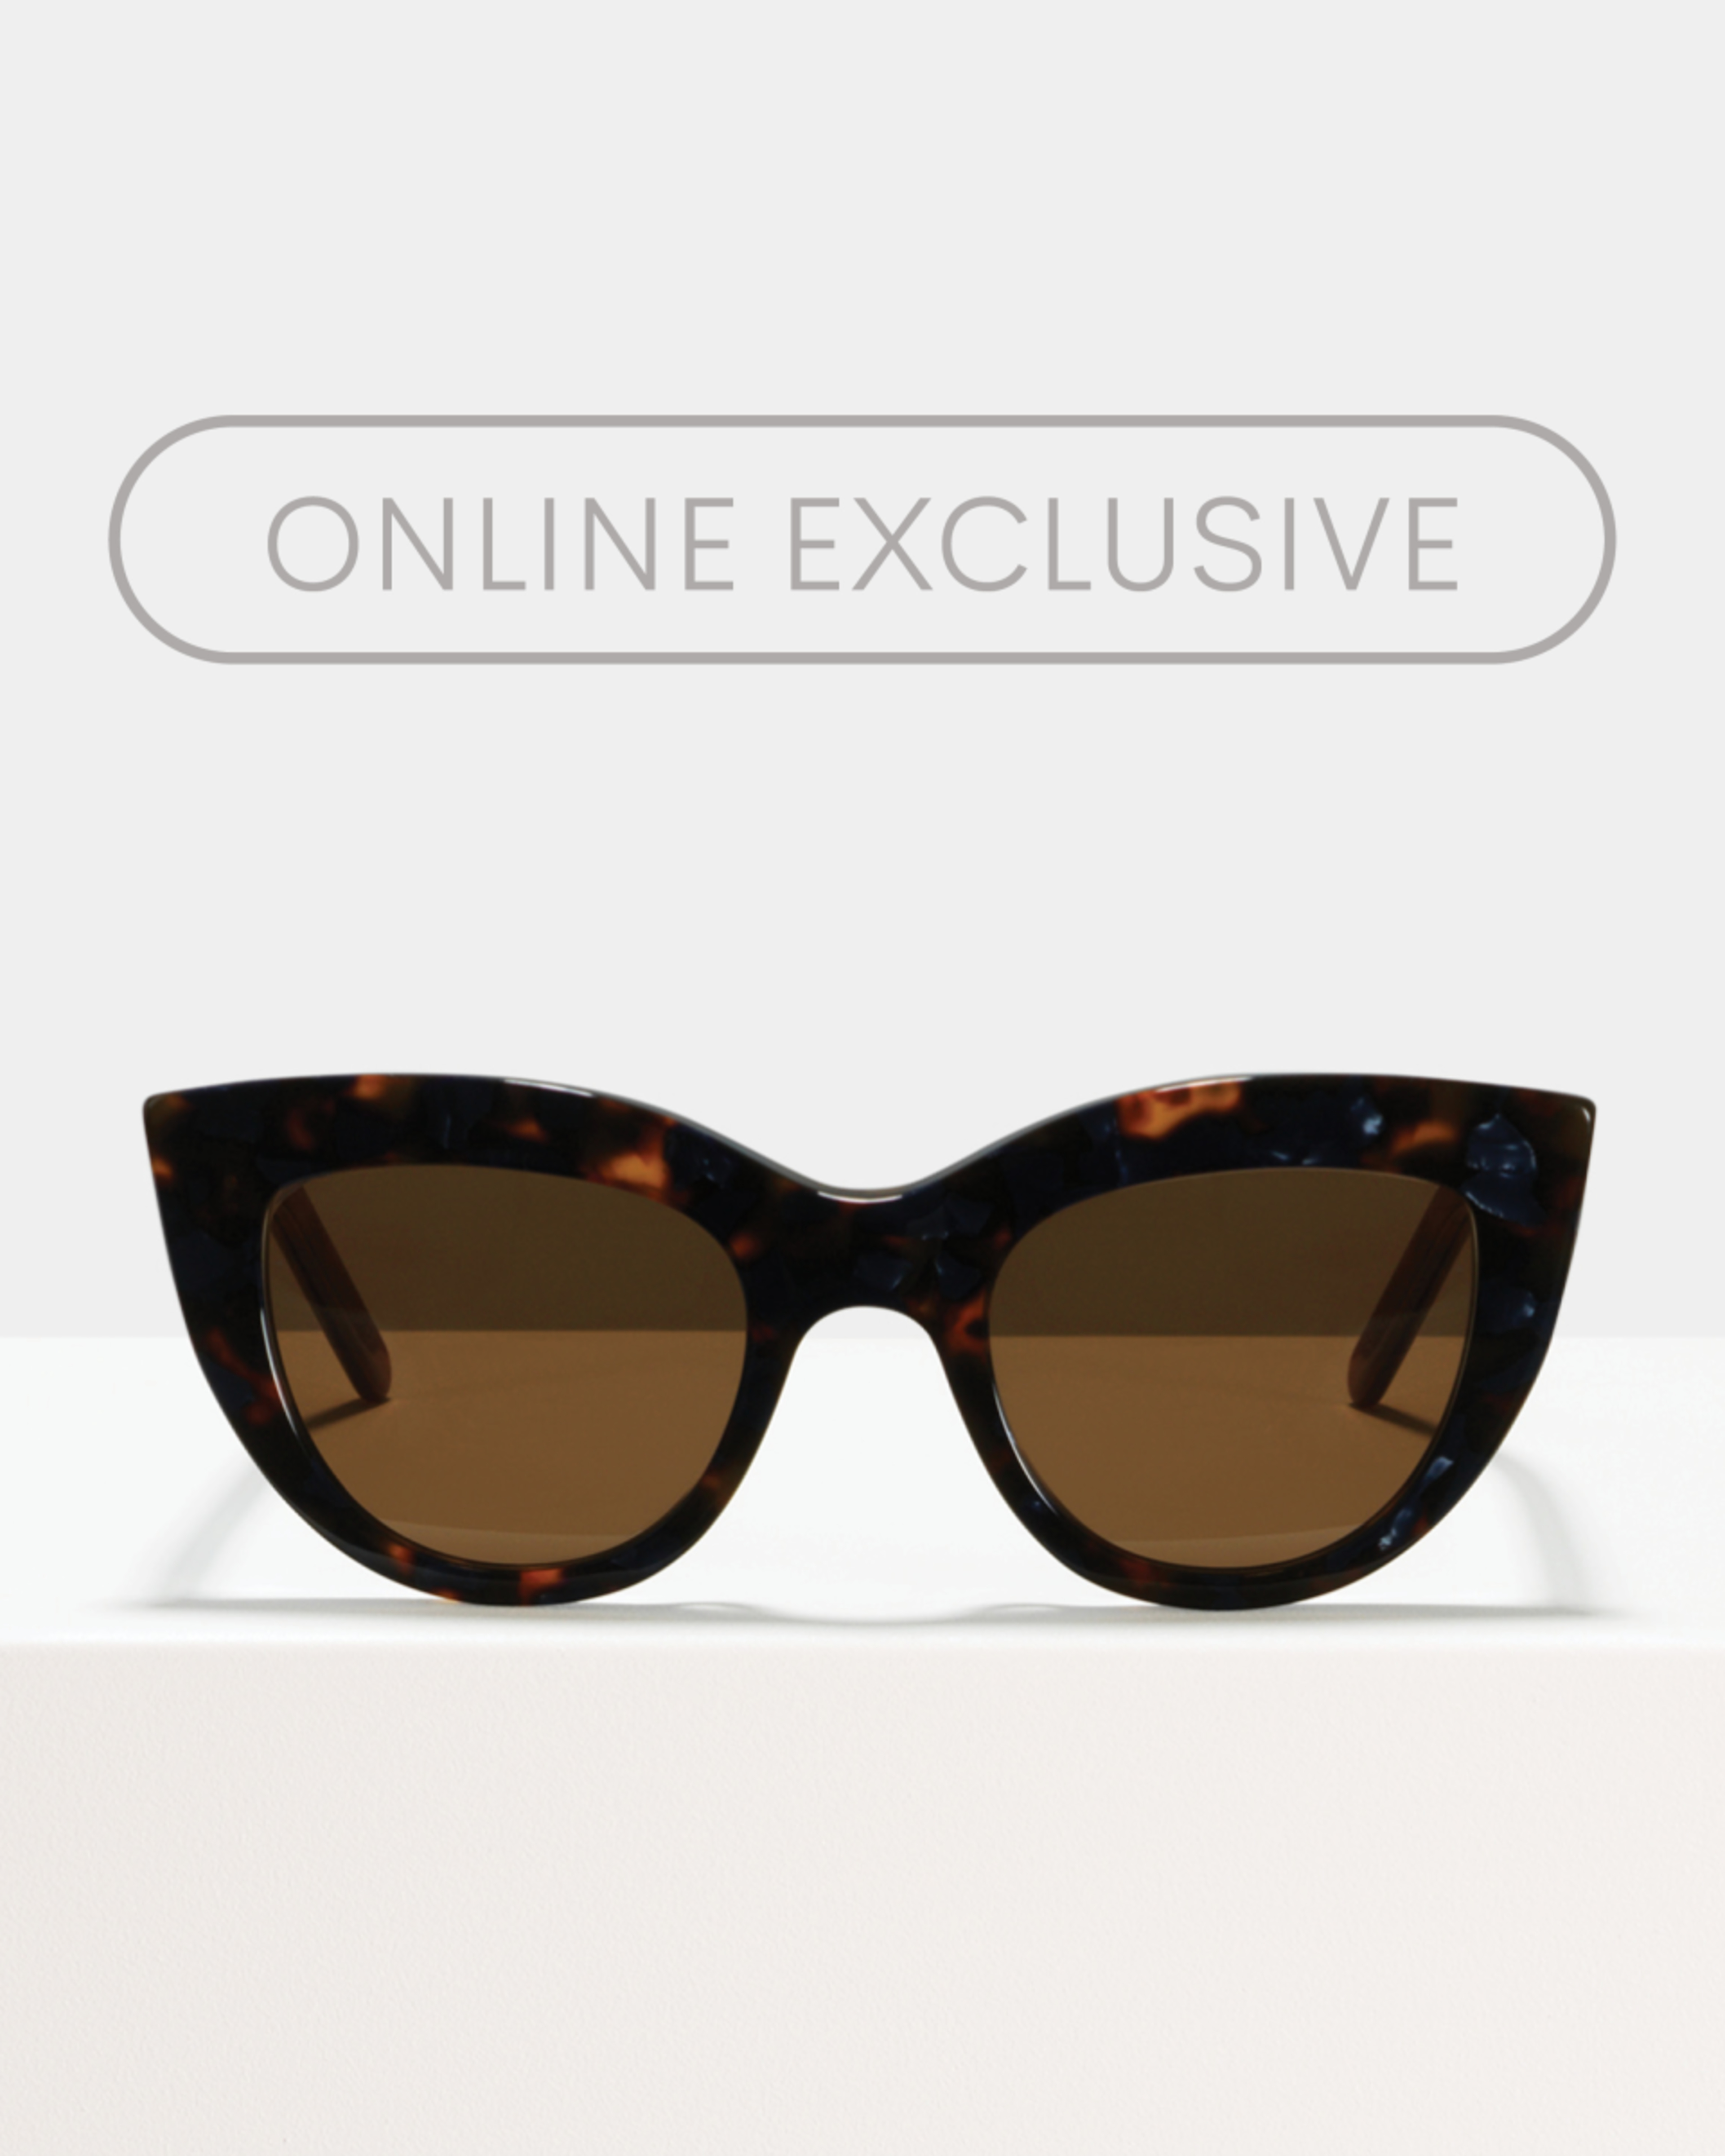 Ace & Tate Sunglasses |  Acetat in Blau, Braun, Orange